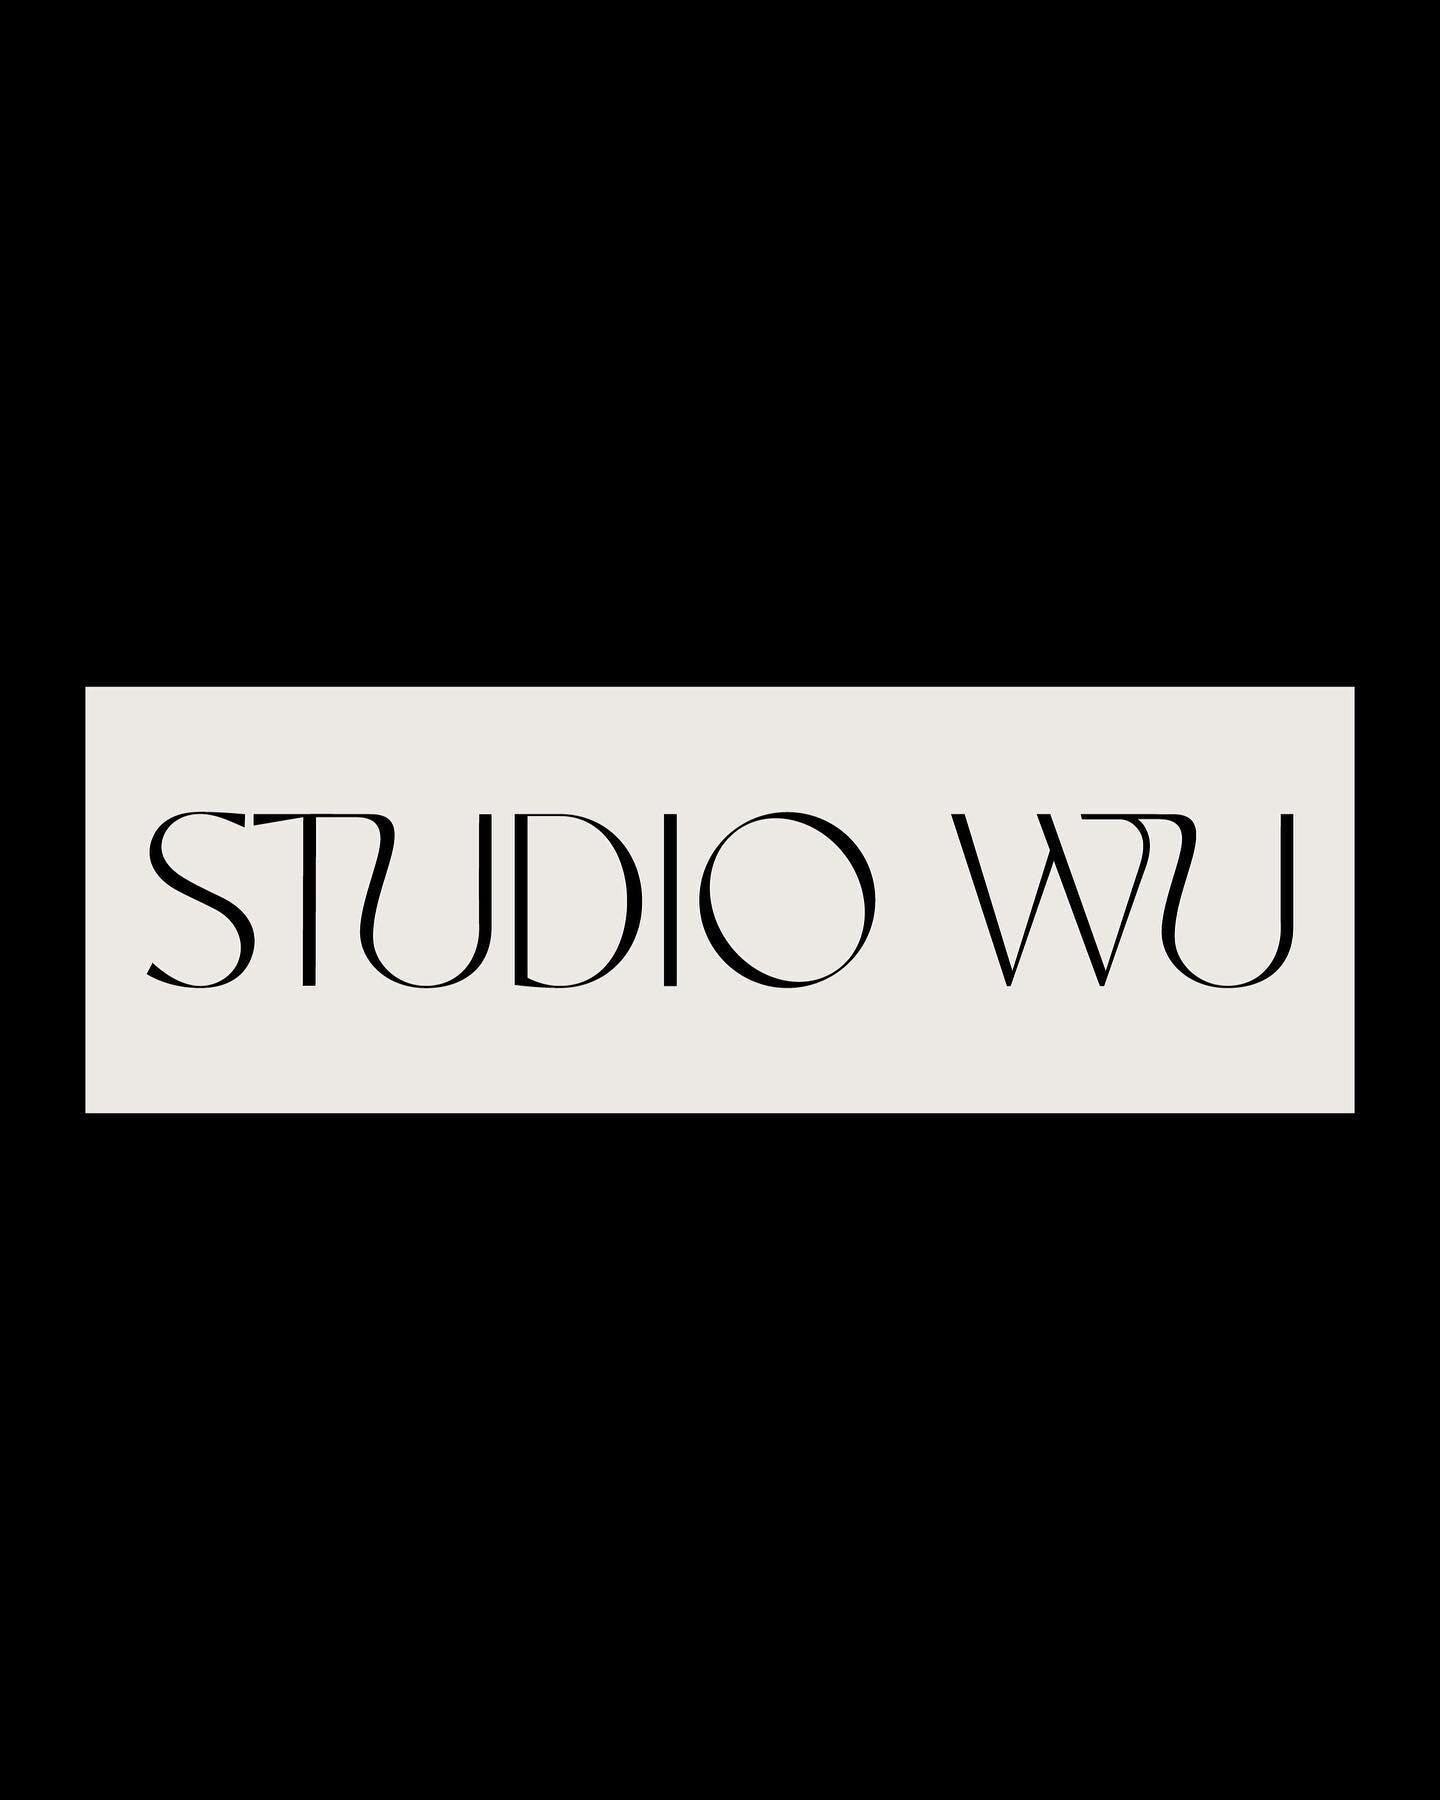 custom wordmark for a brand new interior design studio @studiowuinteriors